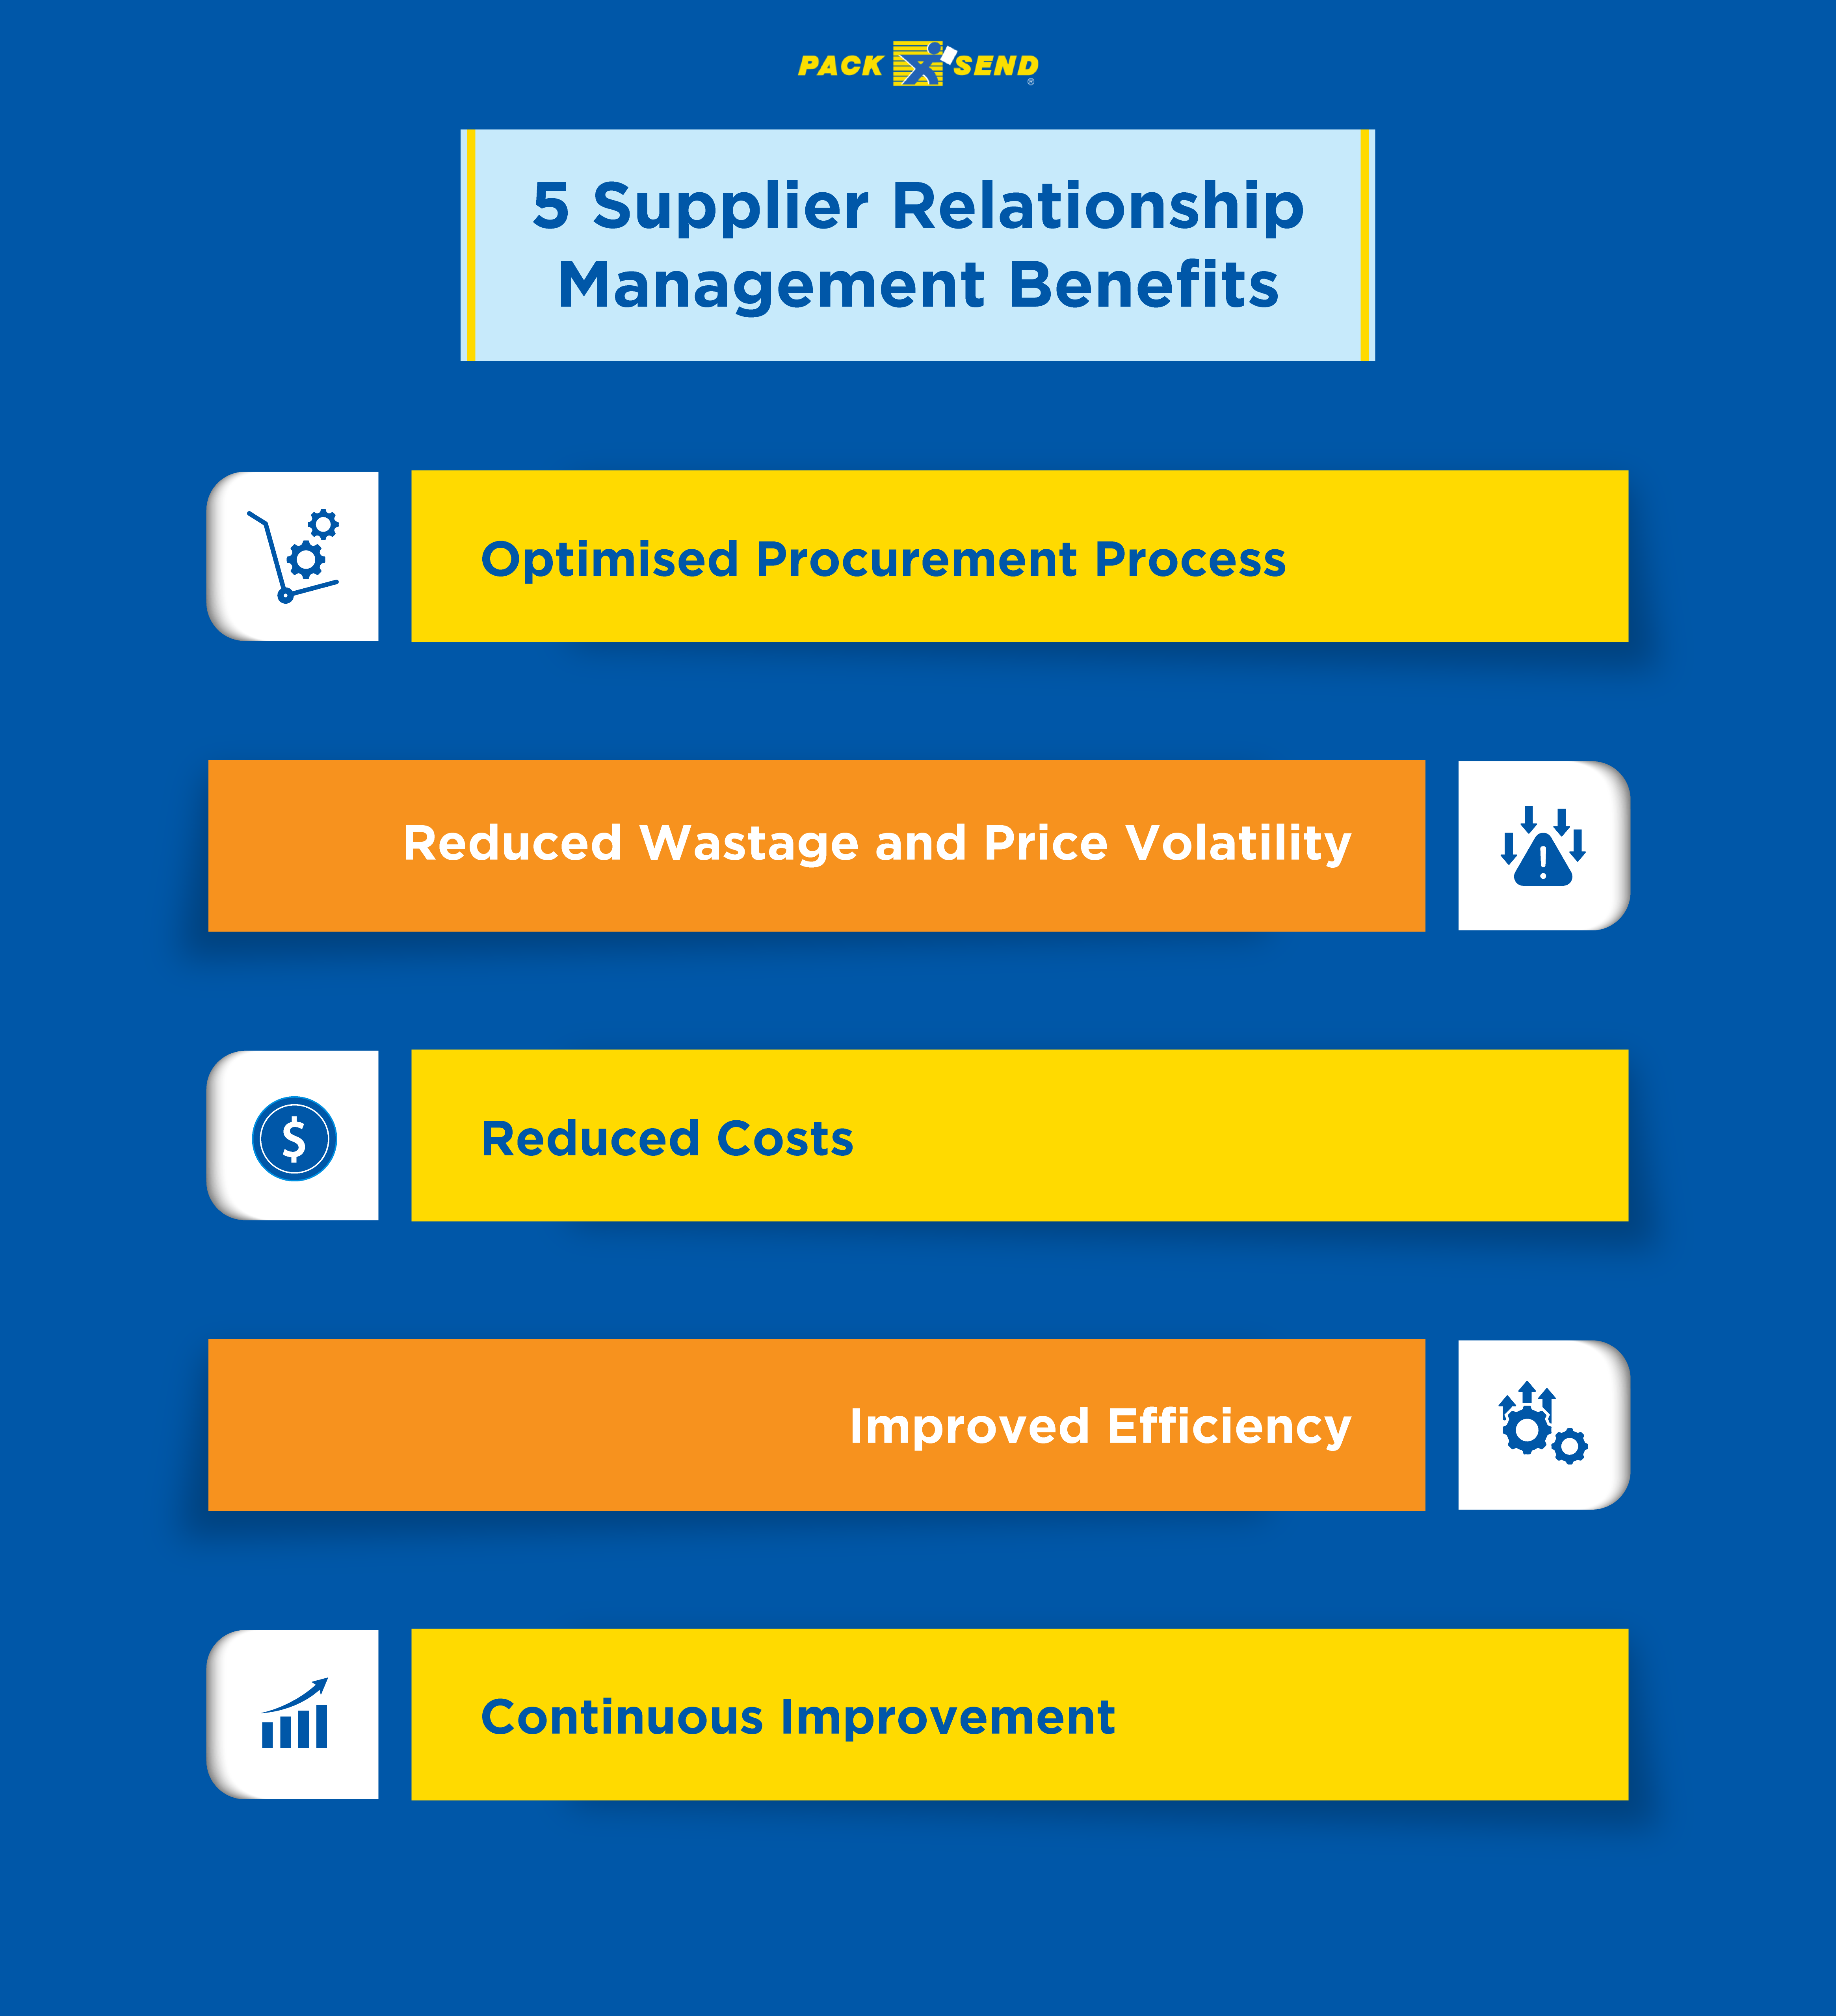 5 Supplier Relationship Management Benefits